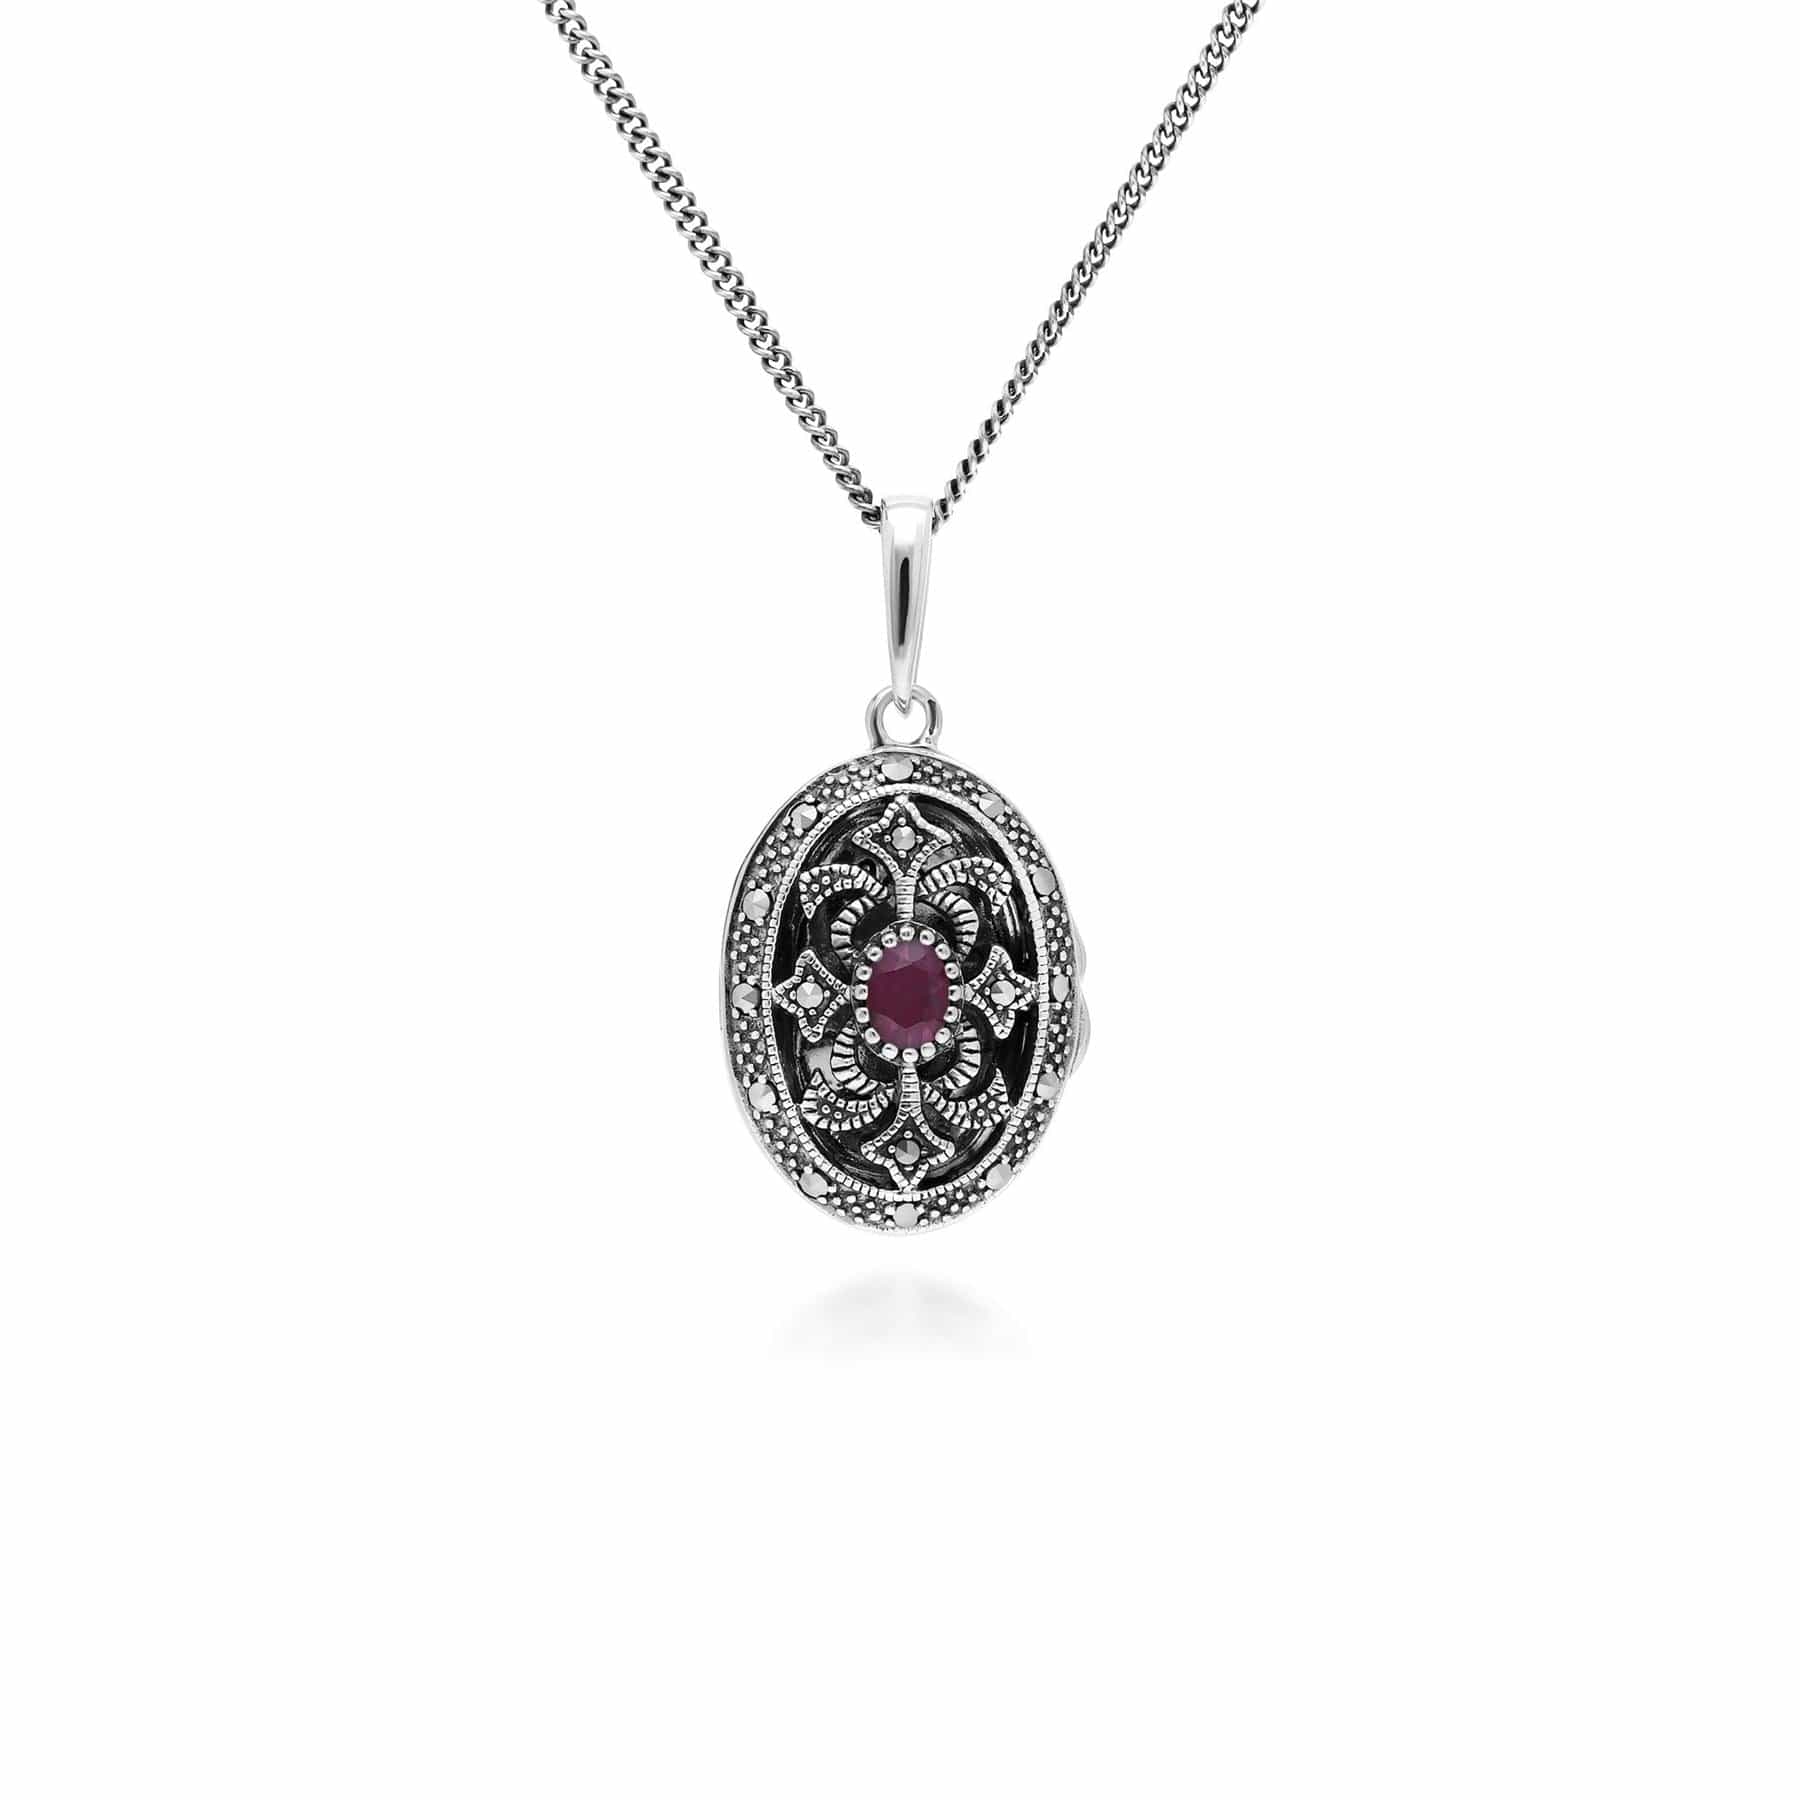 Art Nouveau Style Oval Ruby & Marcasite Locket Necklace in 925 Sterling Silver - Gemondo